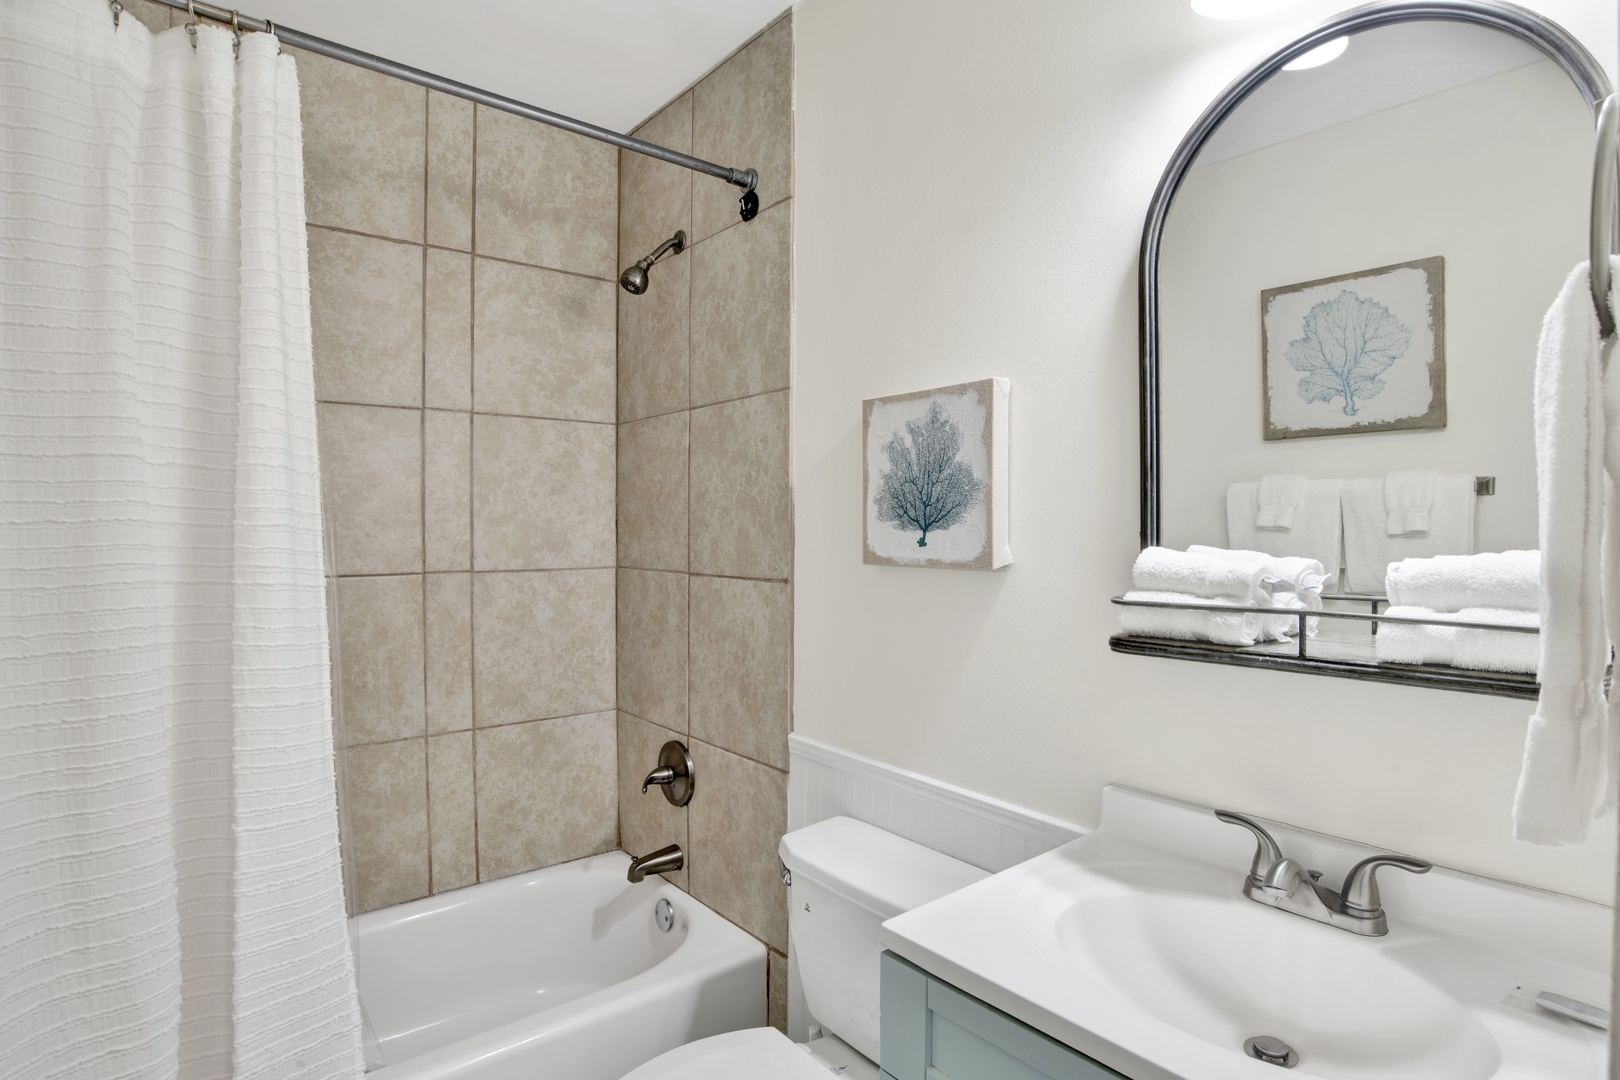 1st floor shared bathroom with a tub/shower combo